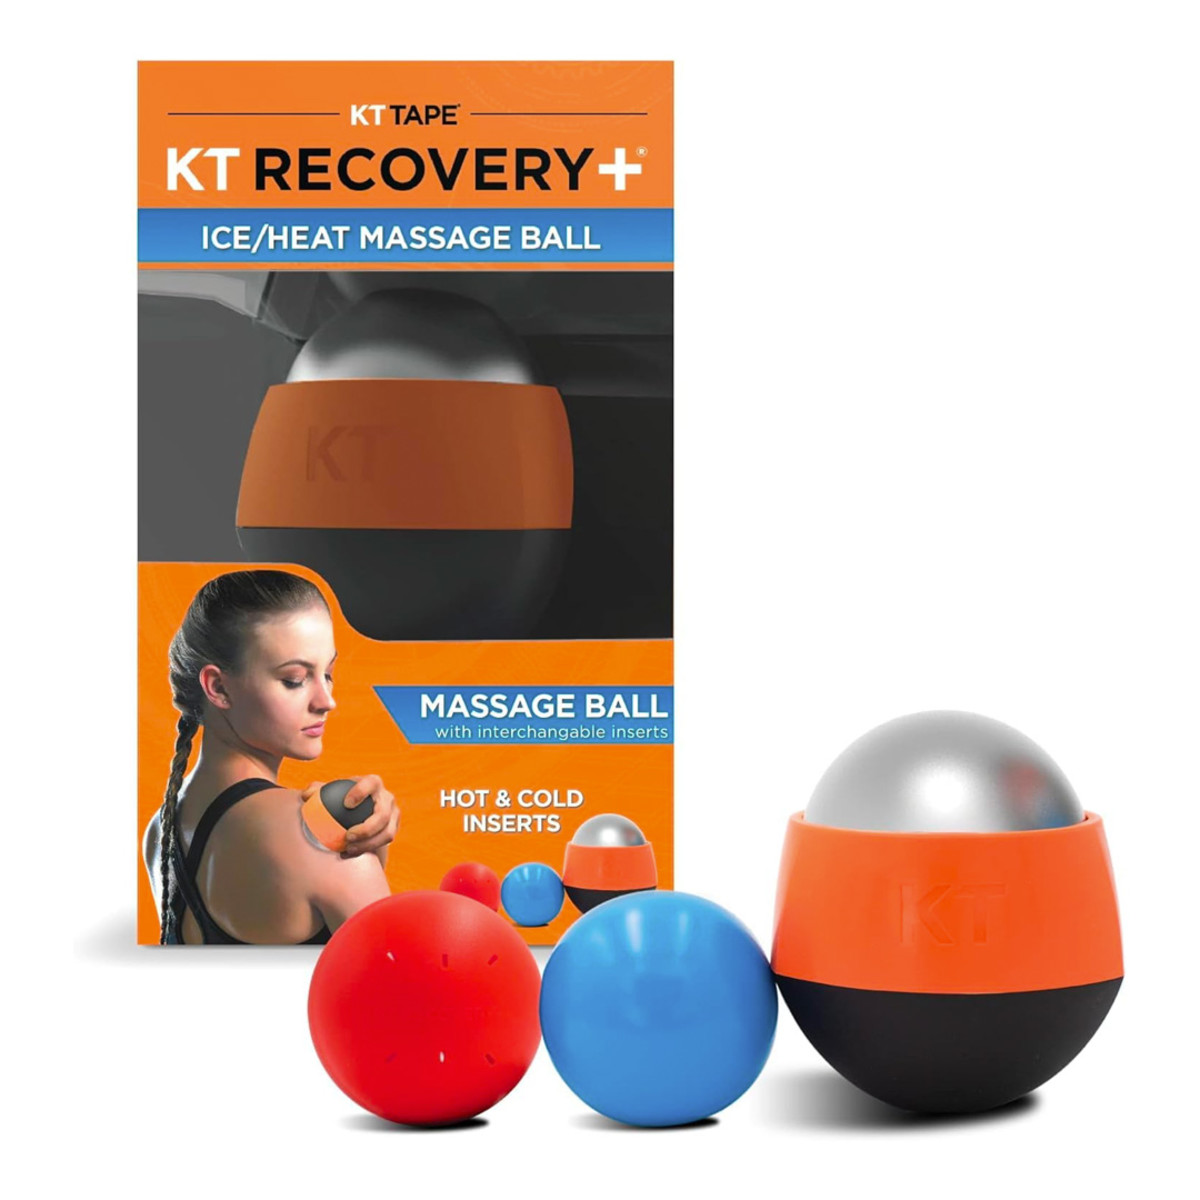 https://www.mensjournal.com/.image/t_share/MjAyNzczMDMwNjg1MTIzNTk2/kt-health-ice-heat-massage-ball-gift.jpg